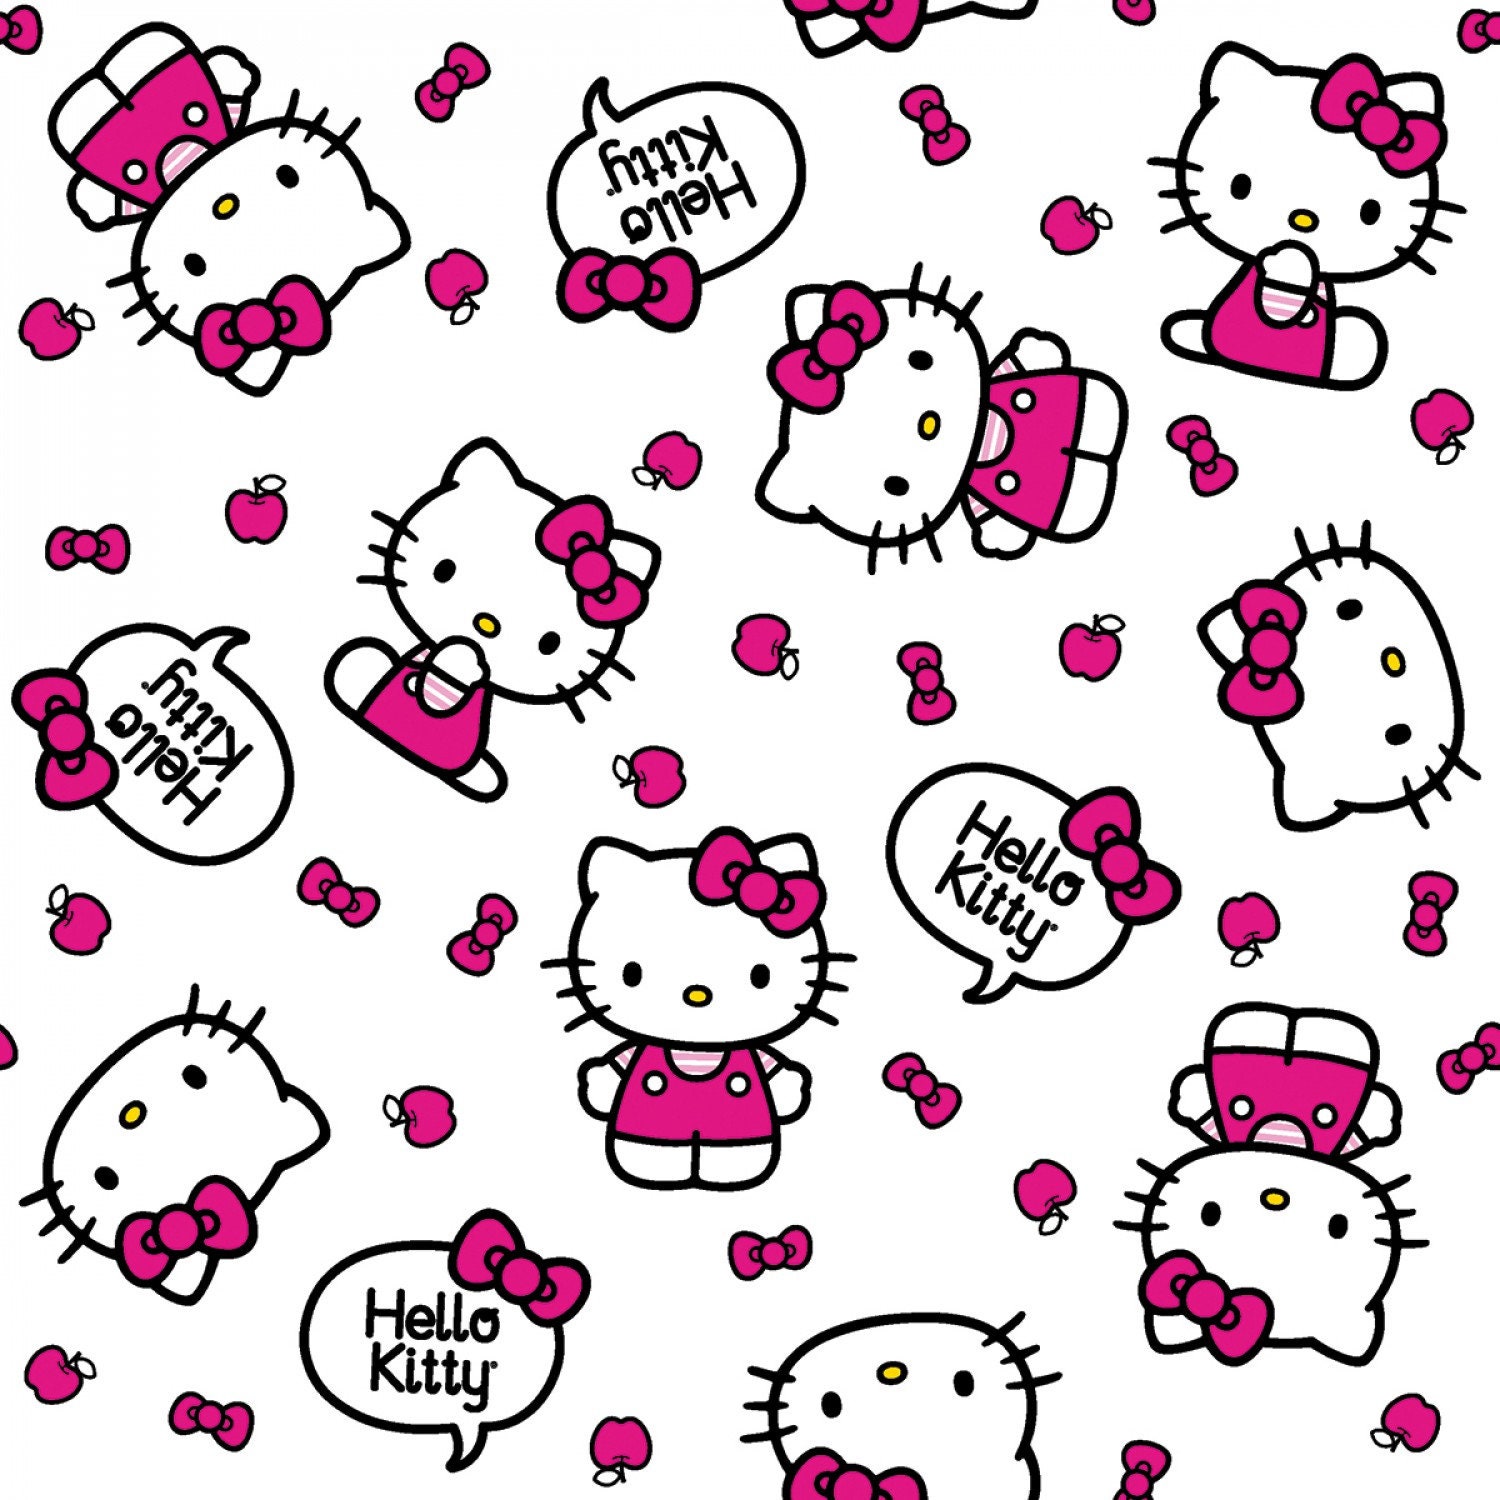 Springs Creative Sanrio Hello Kitty Plaid Toss Minky Fabric